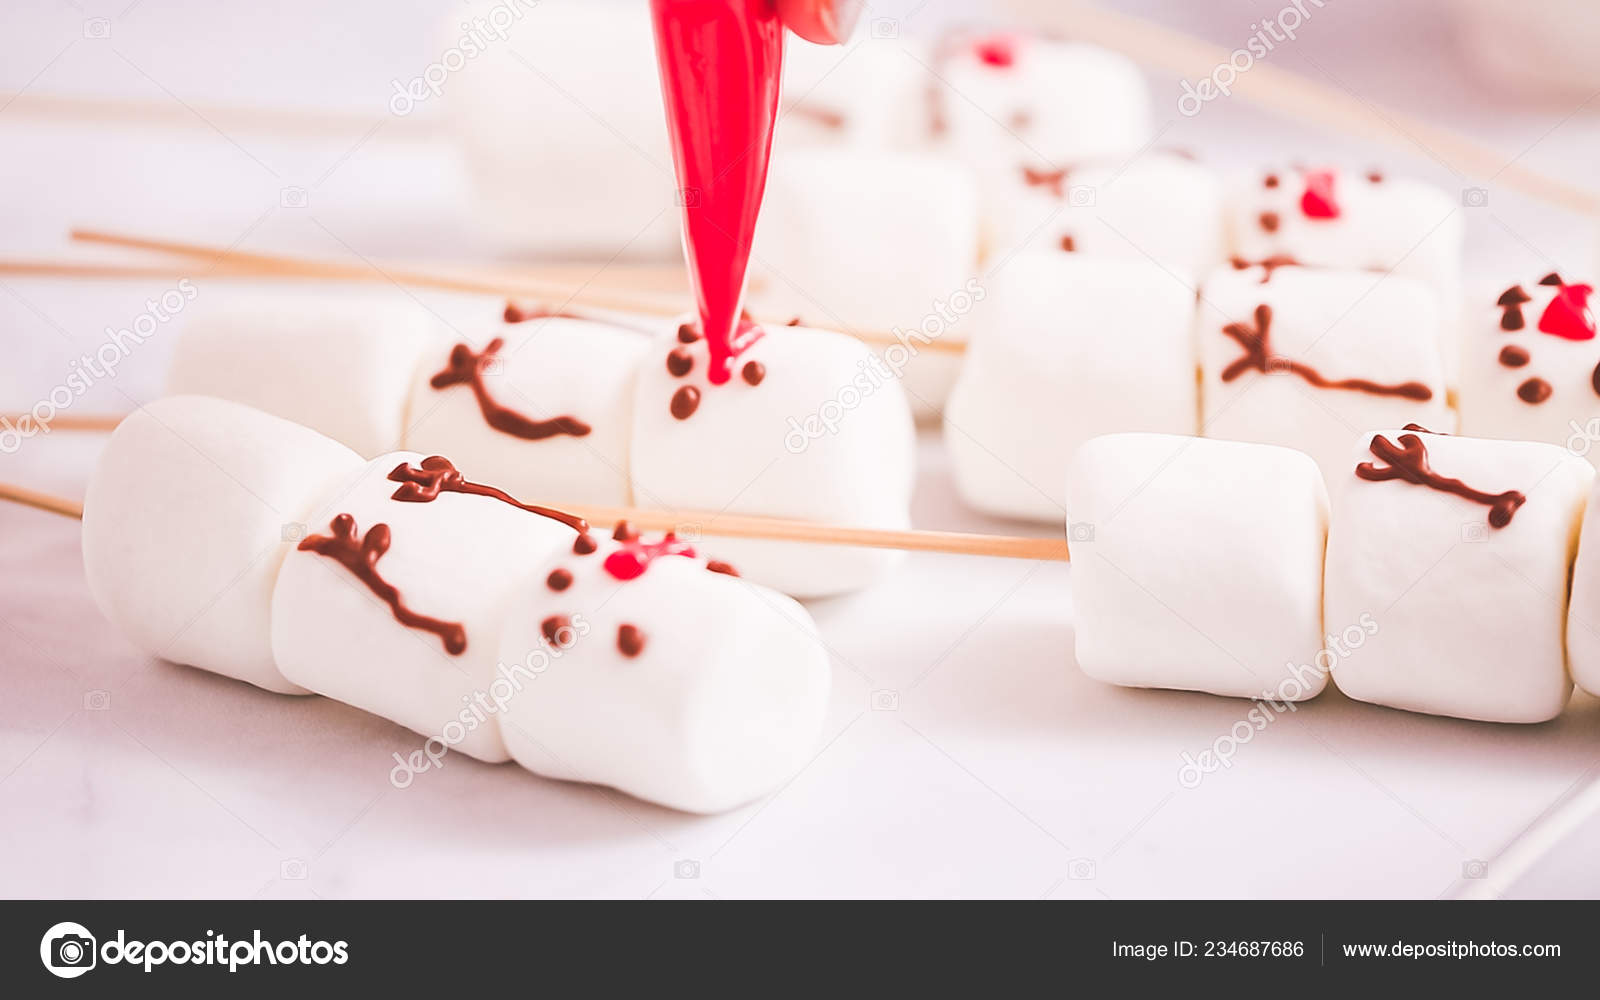 https://st4.depositphotos.com/1118354/23468/i/1600/depositphotos_234687686-stock-photo-step-step-making-marshmallow-snowman.jpg